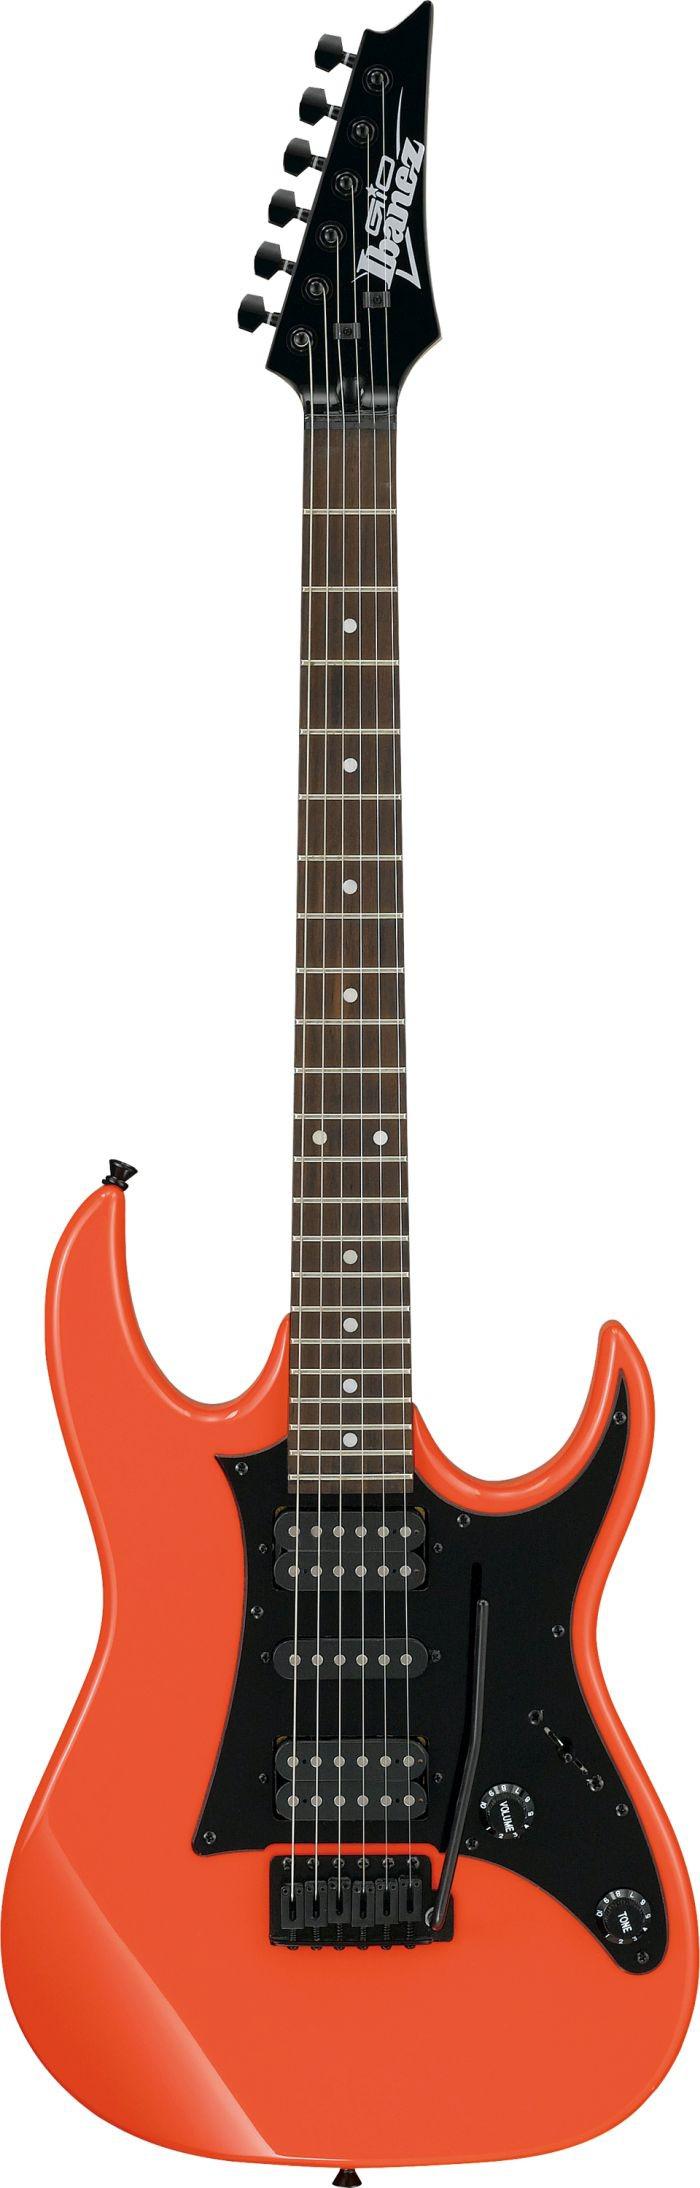 Ibañez - Guitarra Eléctrica RG, Color: Roja Mod.GRX55B-VRD_55